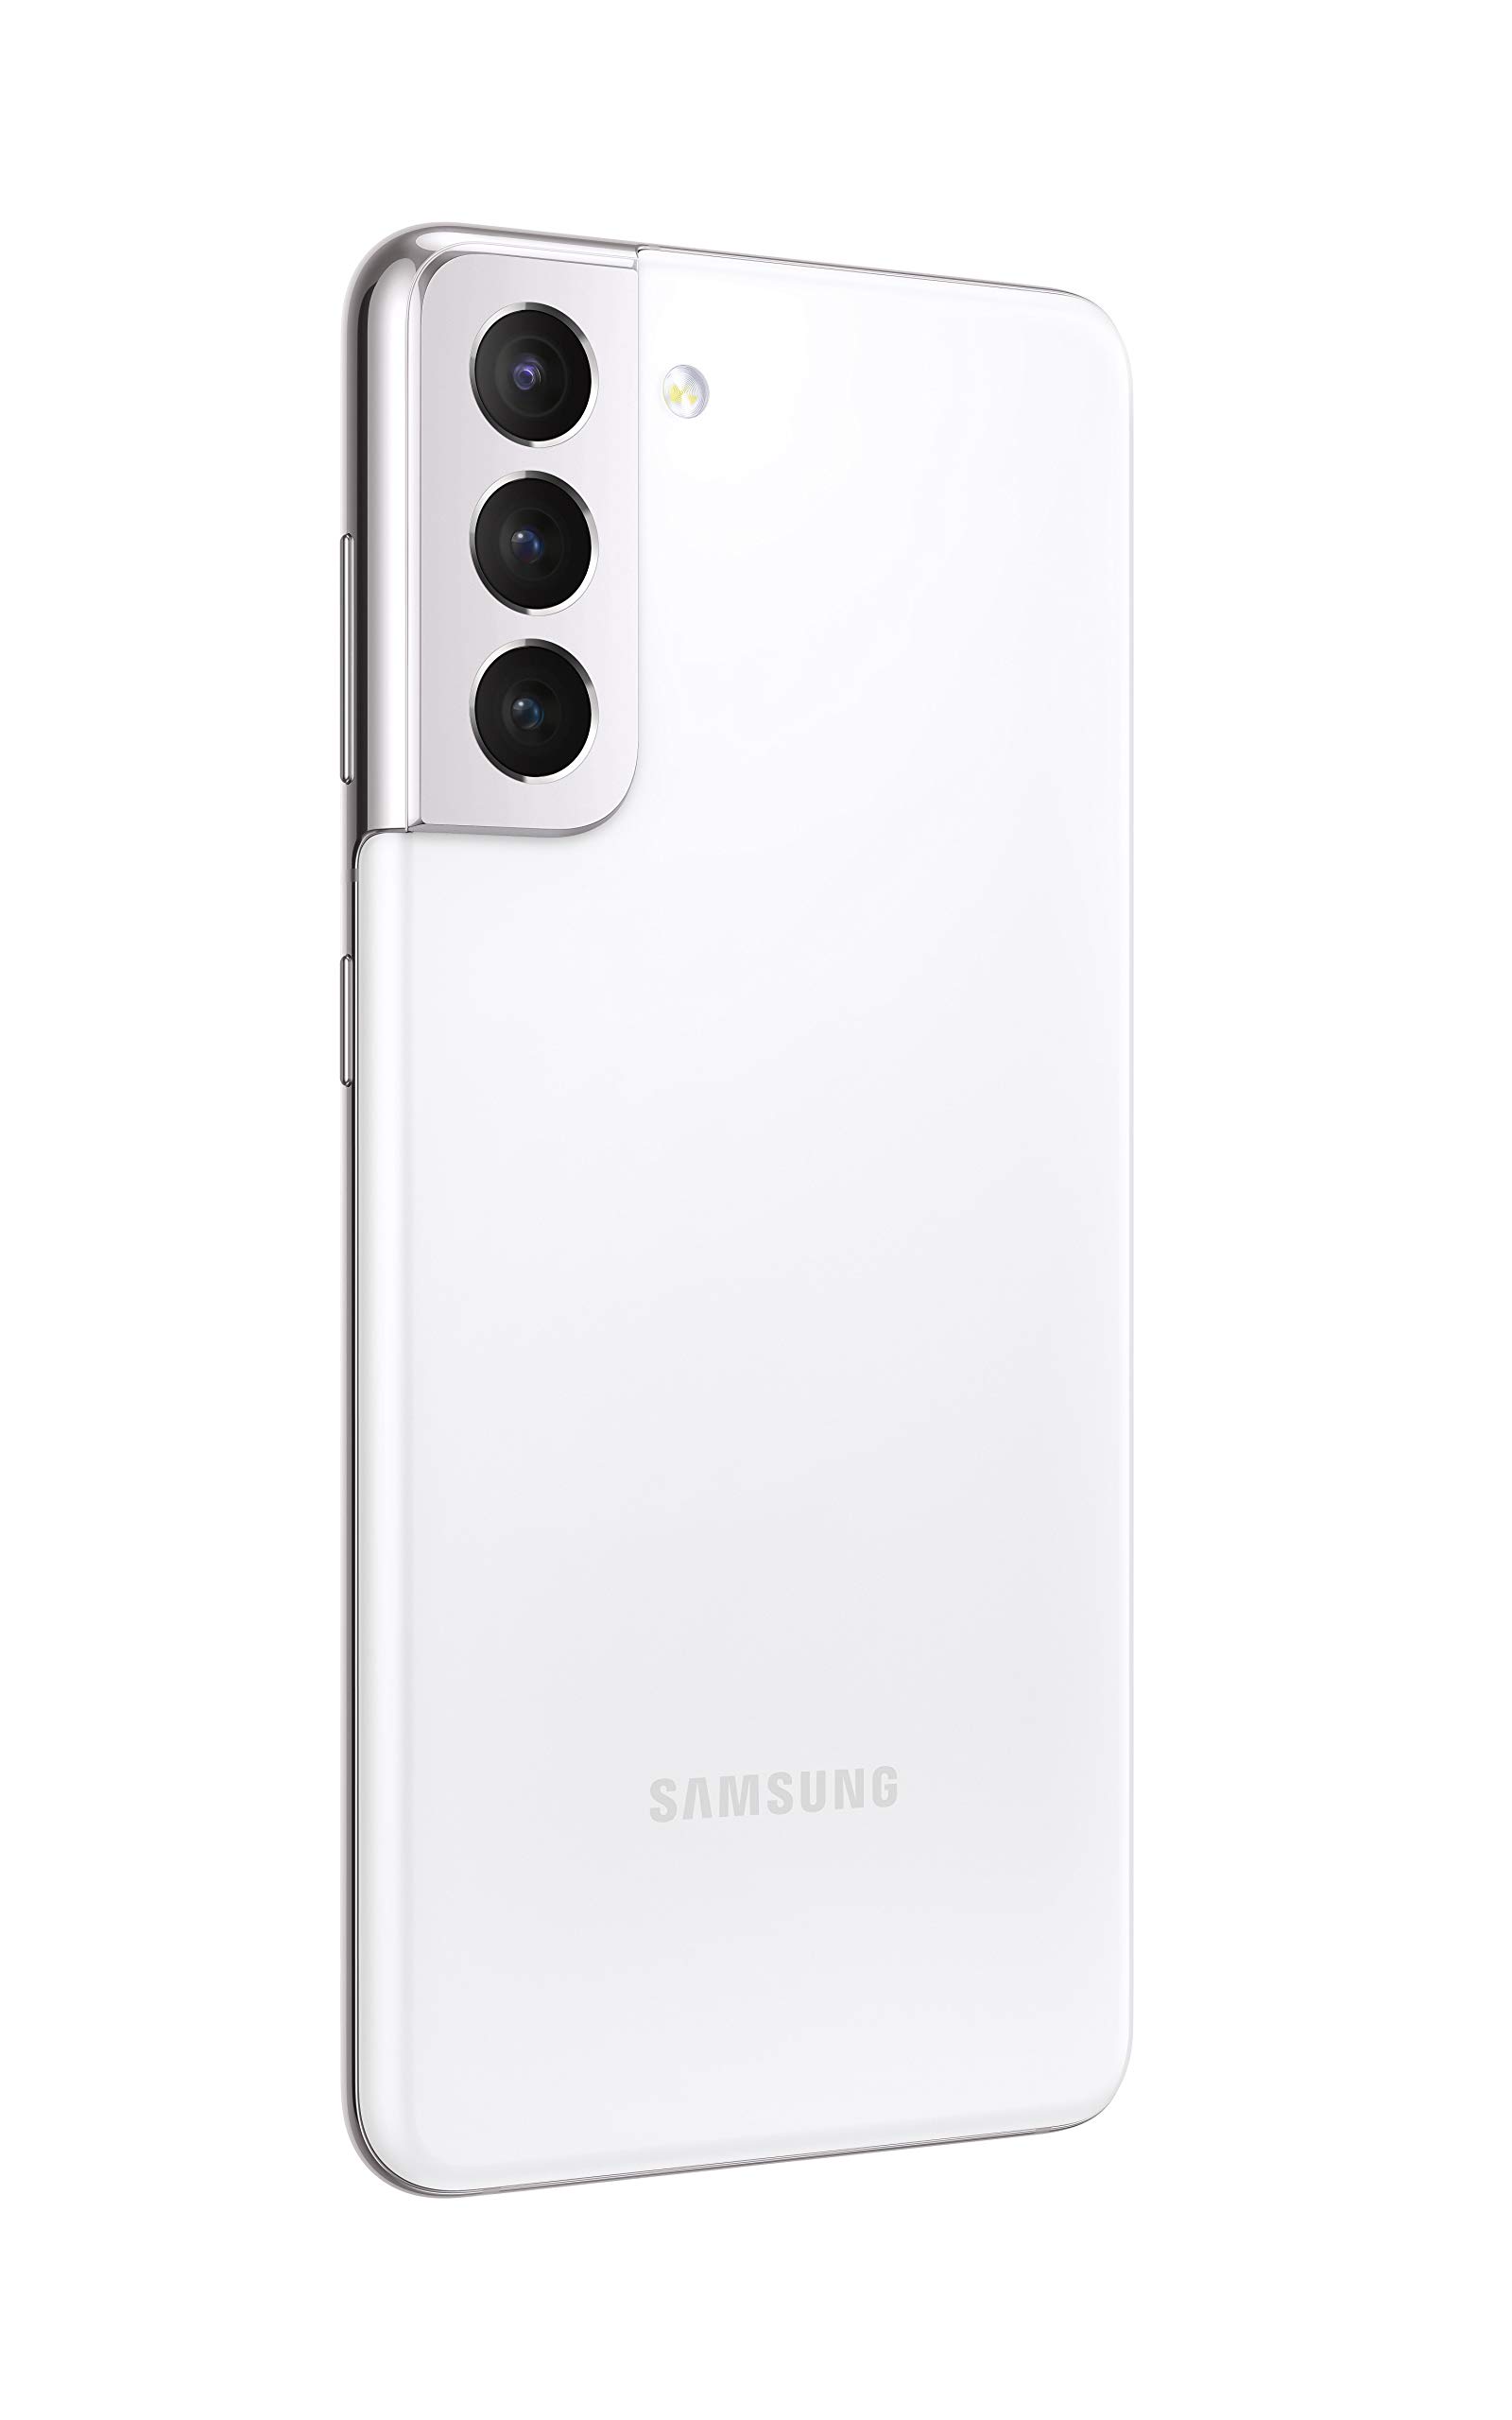 Samsung Galaxy S21 5G | Factory Unlocked Android Cell Phone | US Version 5G Smartphone | Pro-Grade Camera, 8K Video, 64MP High Res | 128GB, Phantom White (SM-G991UZWAXAA)